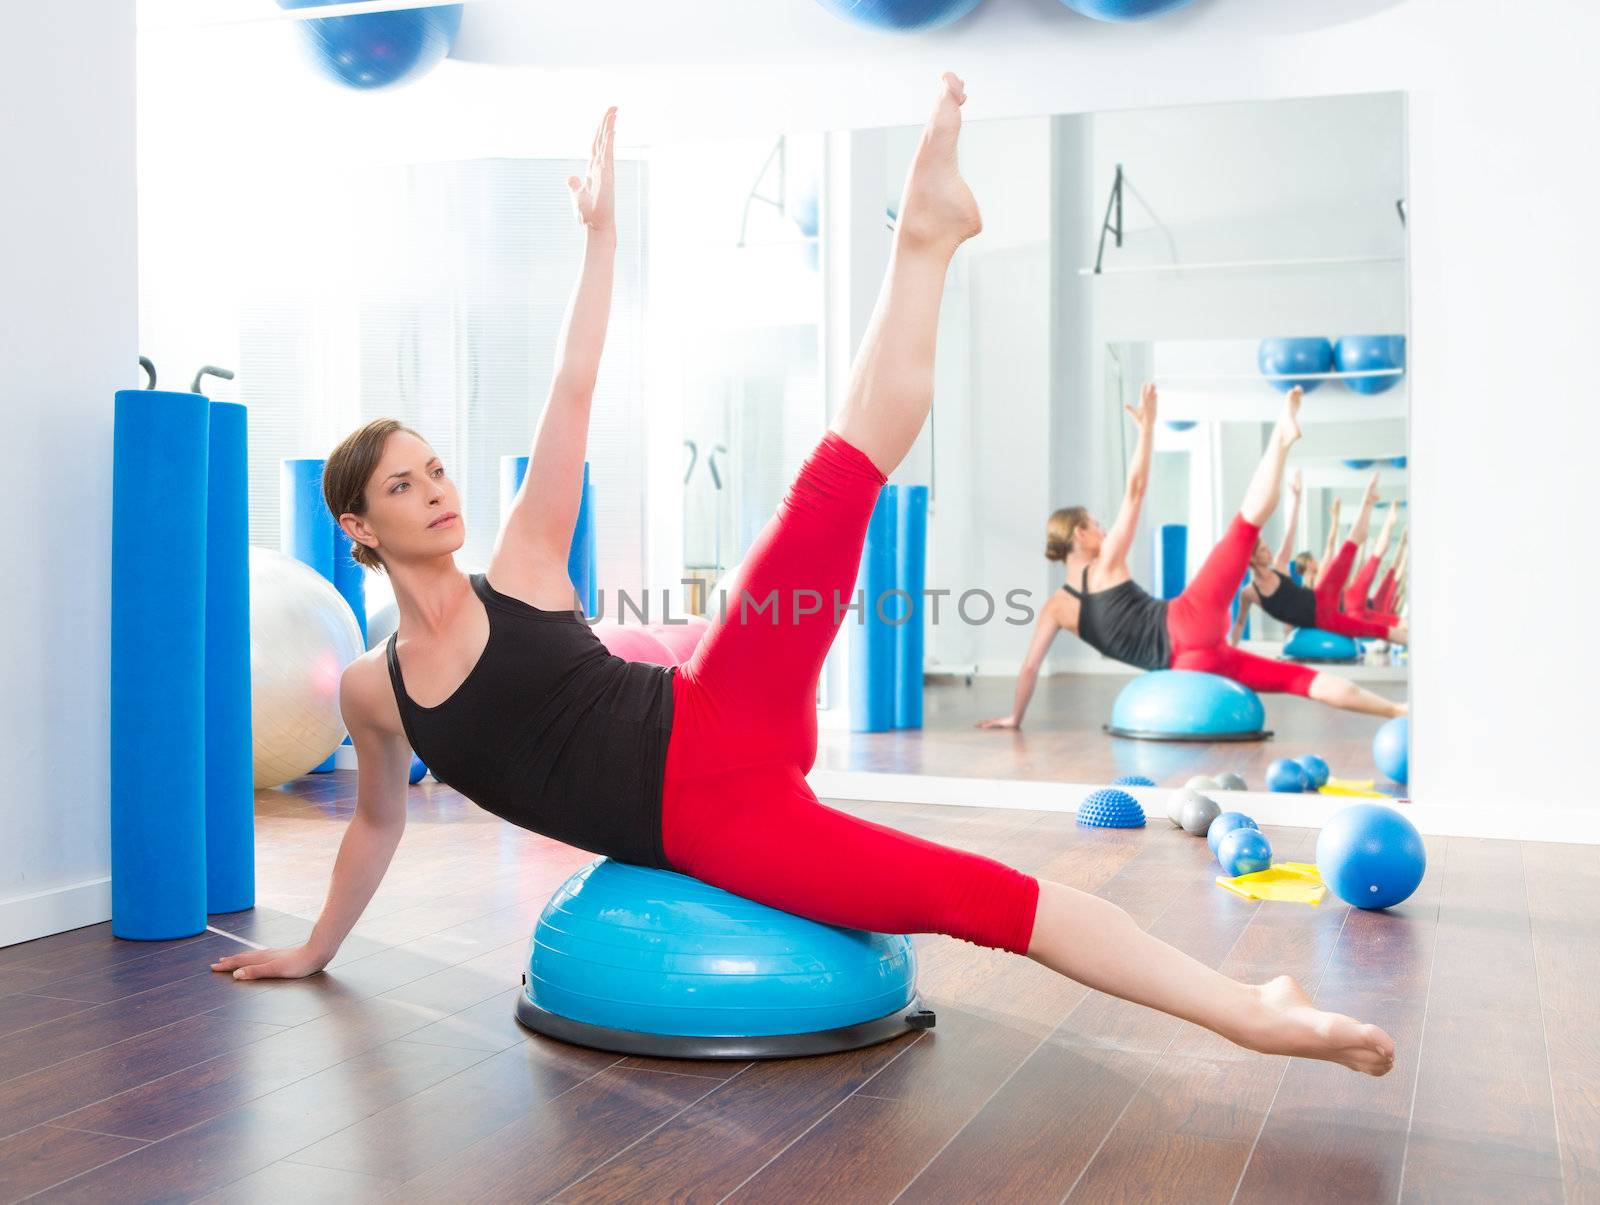 Bosu ball for fitness instructor woman in aerobics by lunamarina